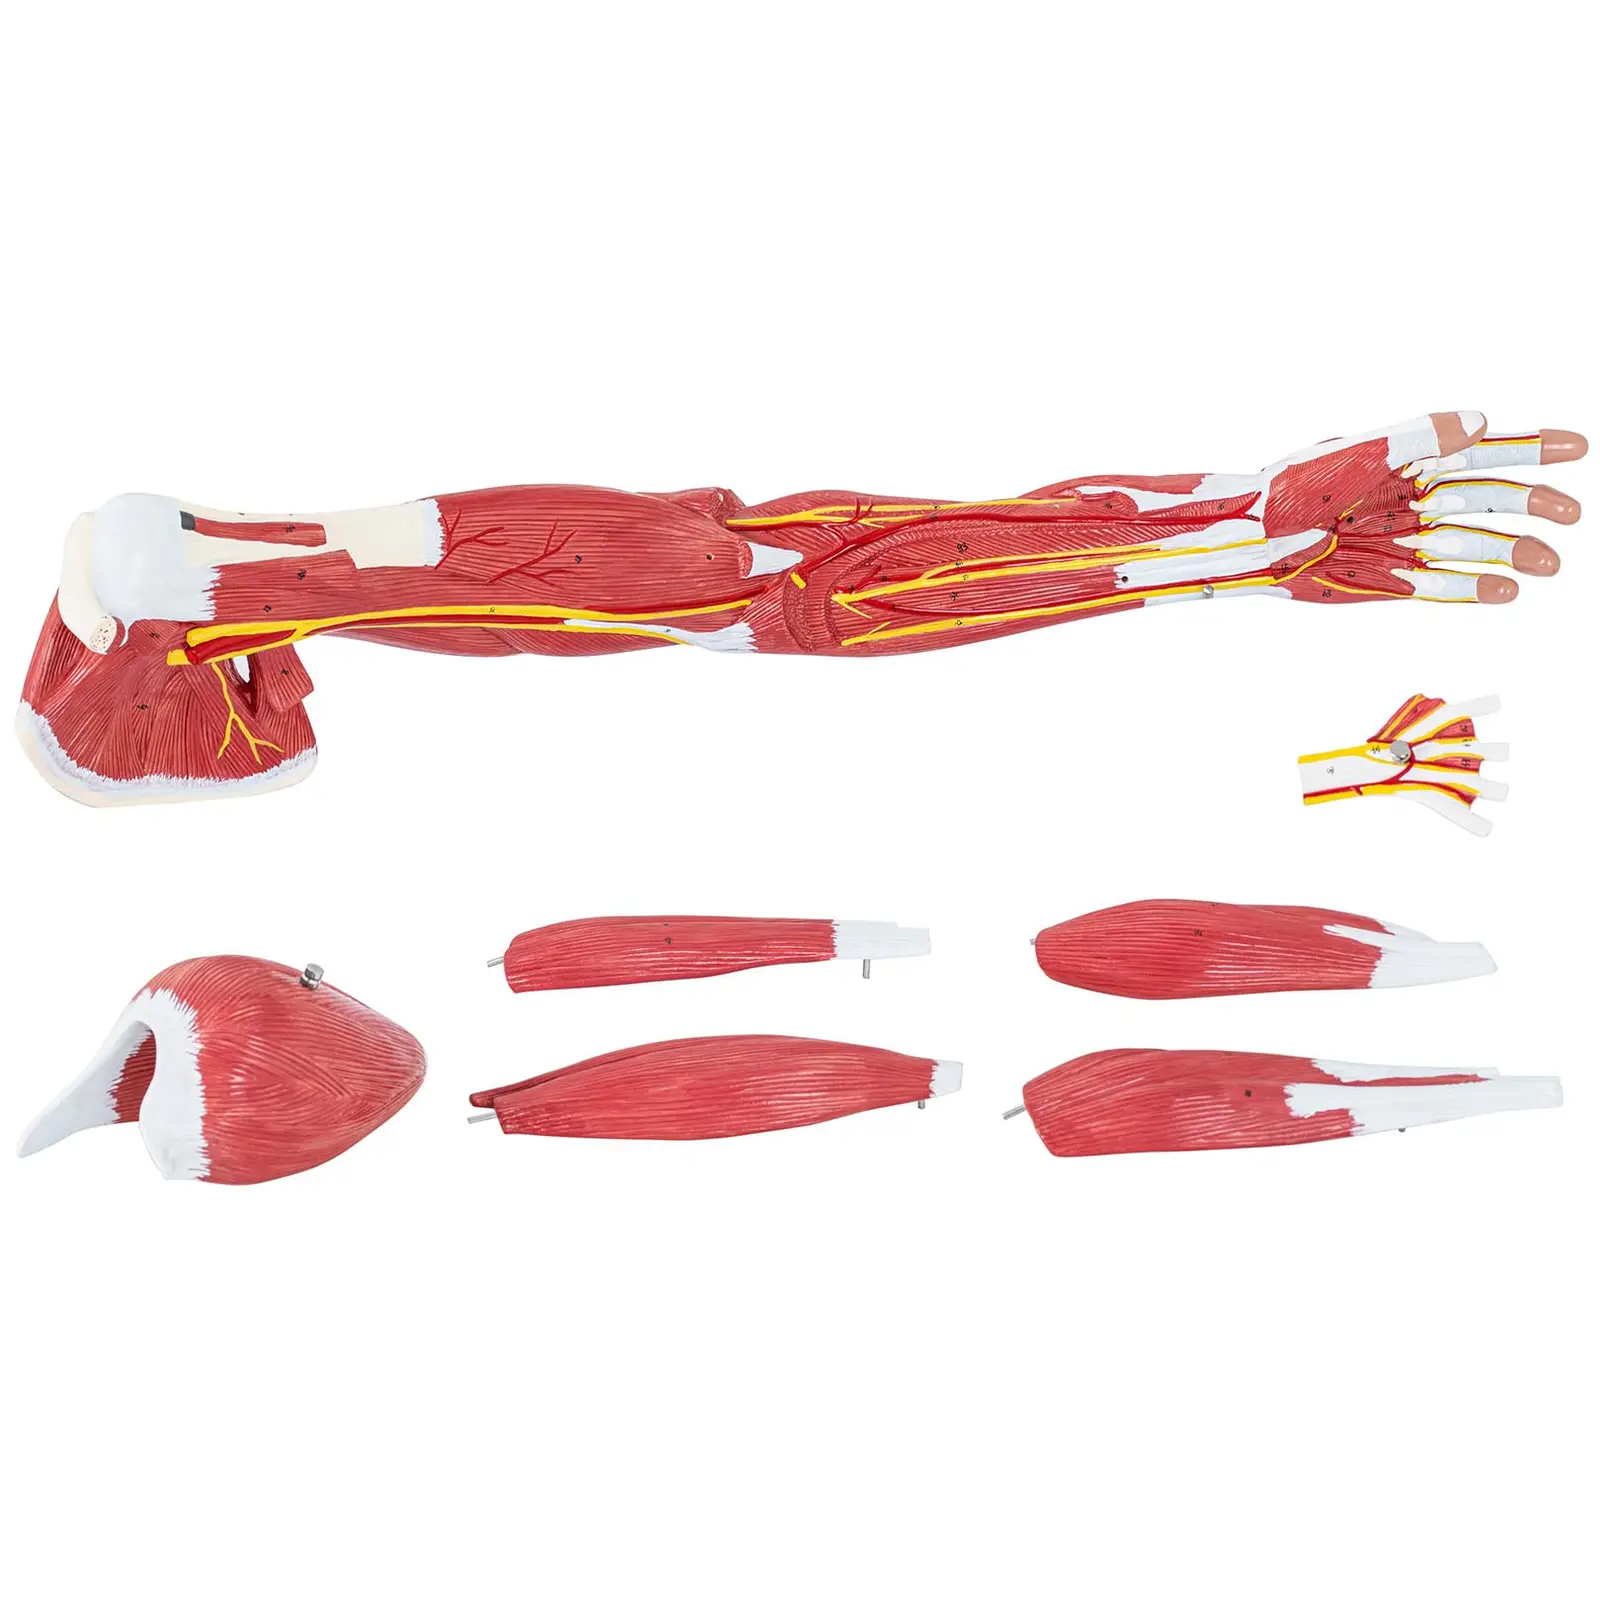 Maquette anatomique bras humain - En 7 parties - Grandeur nature